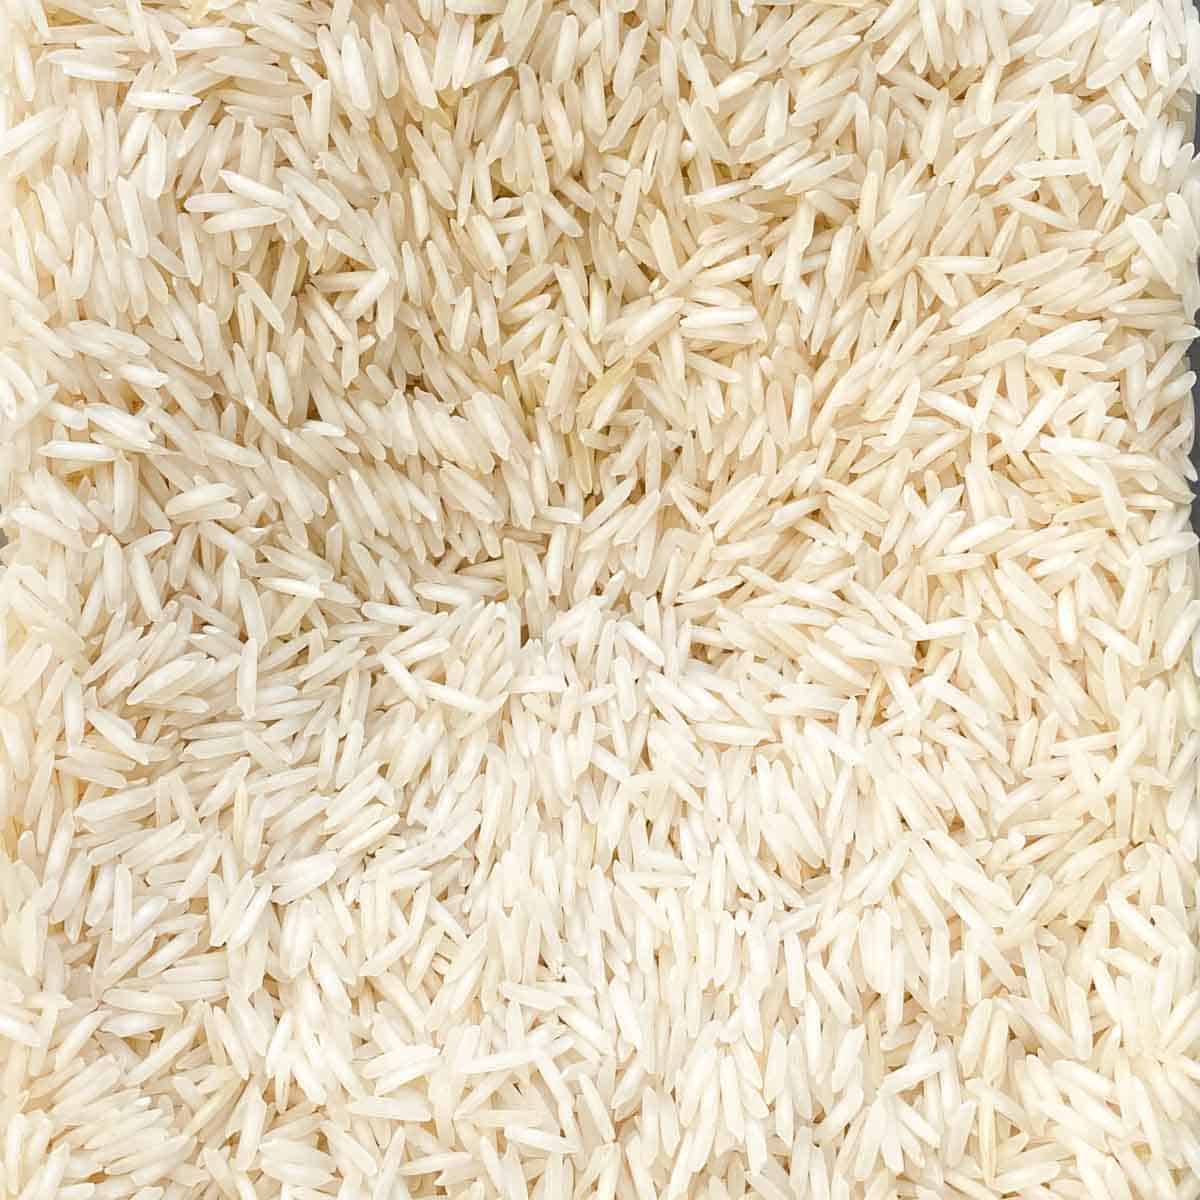 Basmati rice granules before being cooked